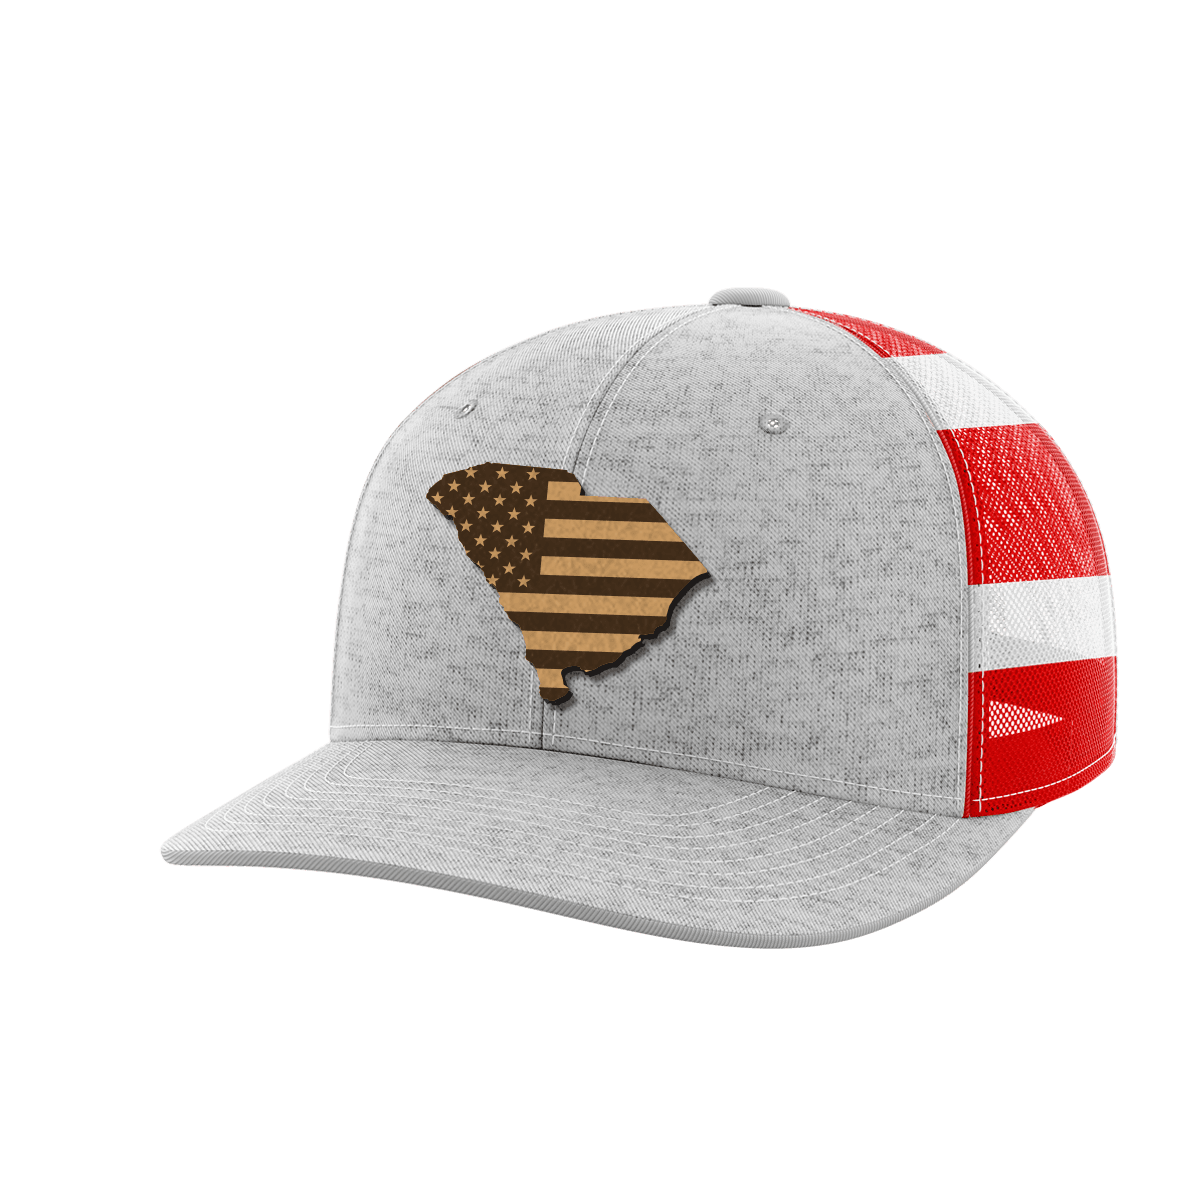 Thumbnail for South Carolina United Hats - Greater Half